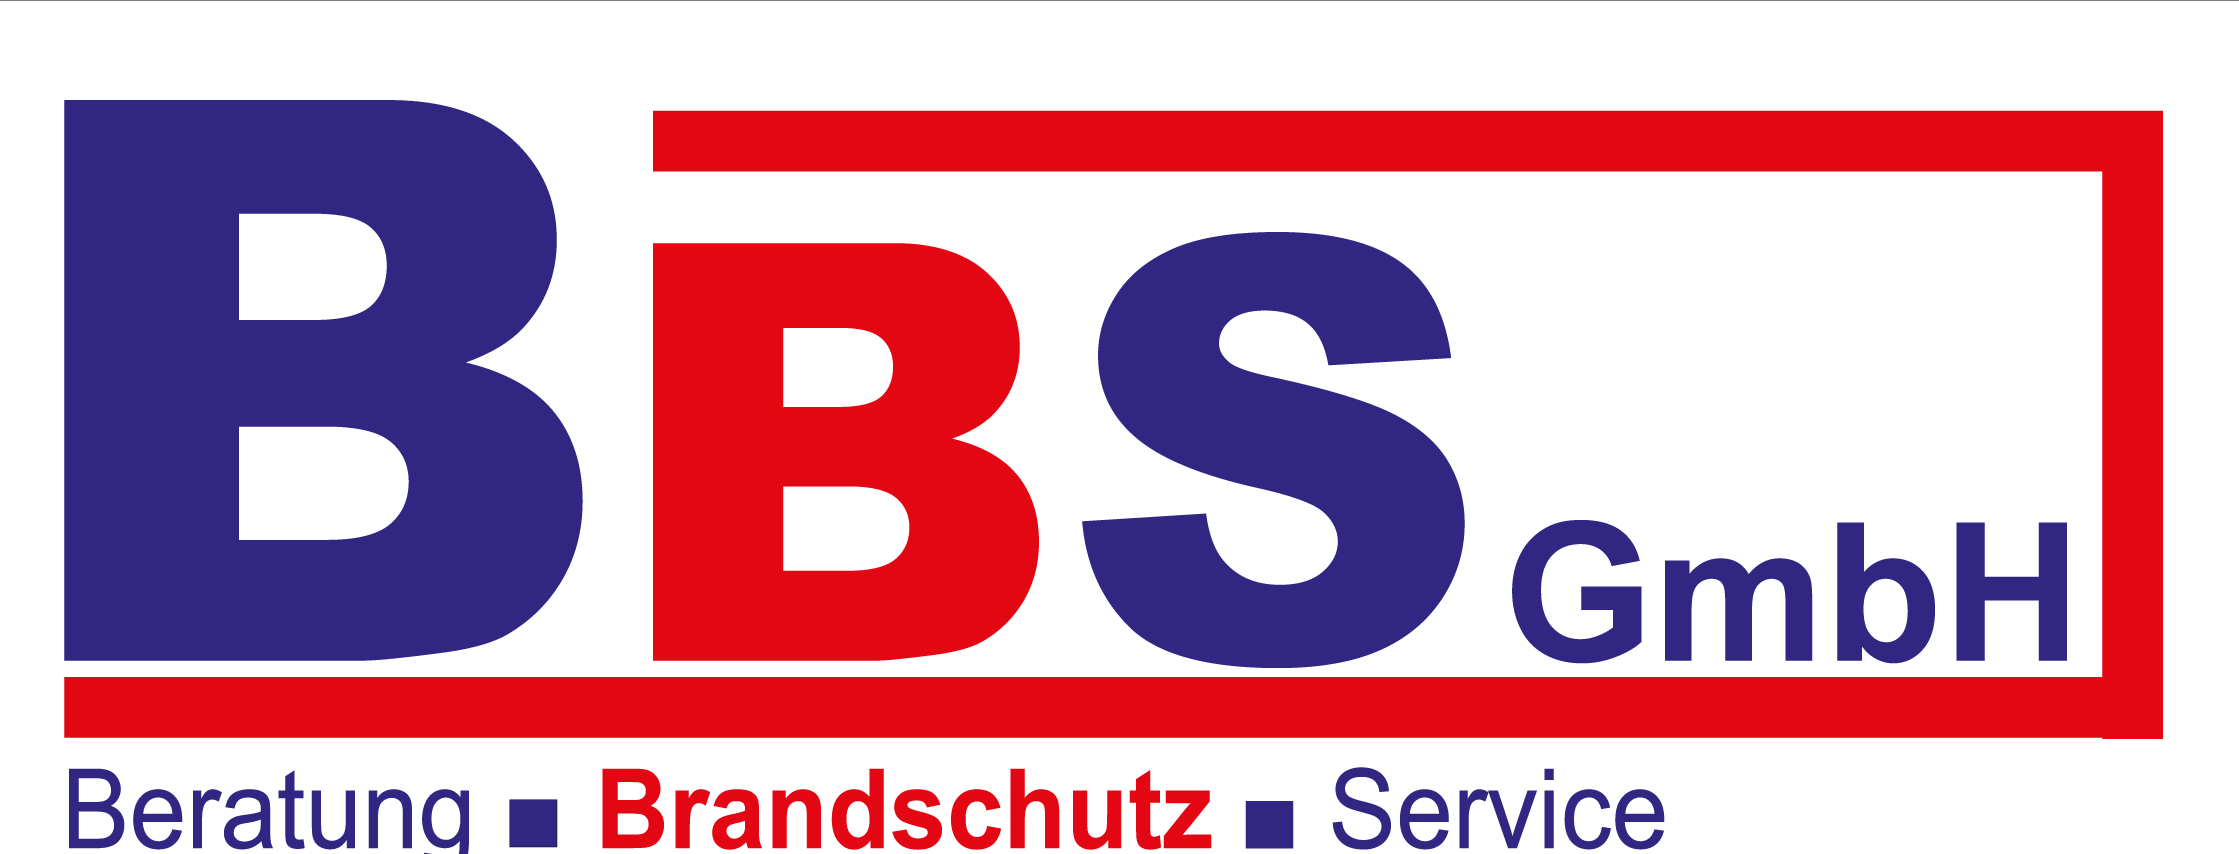 BBS GmbH Beratung Brandschutz Service